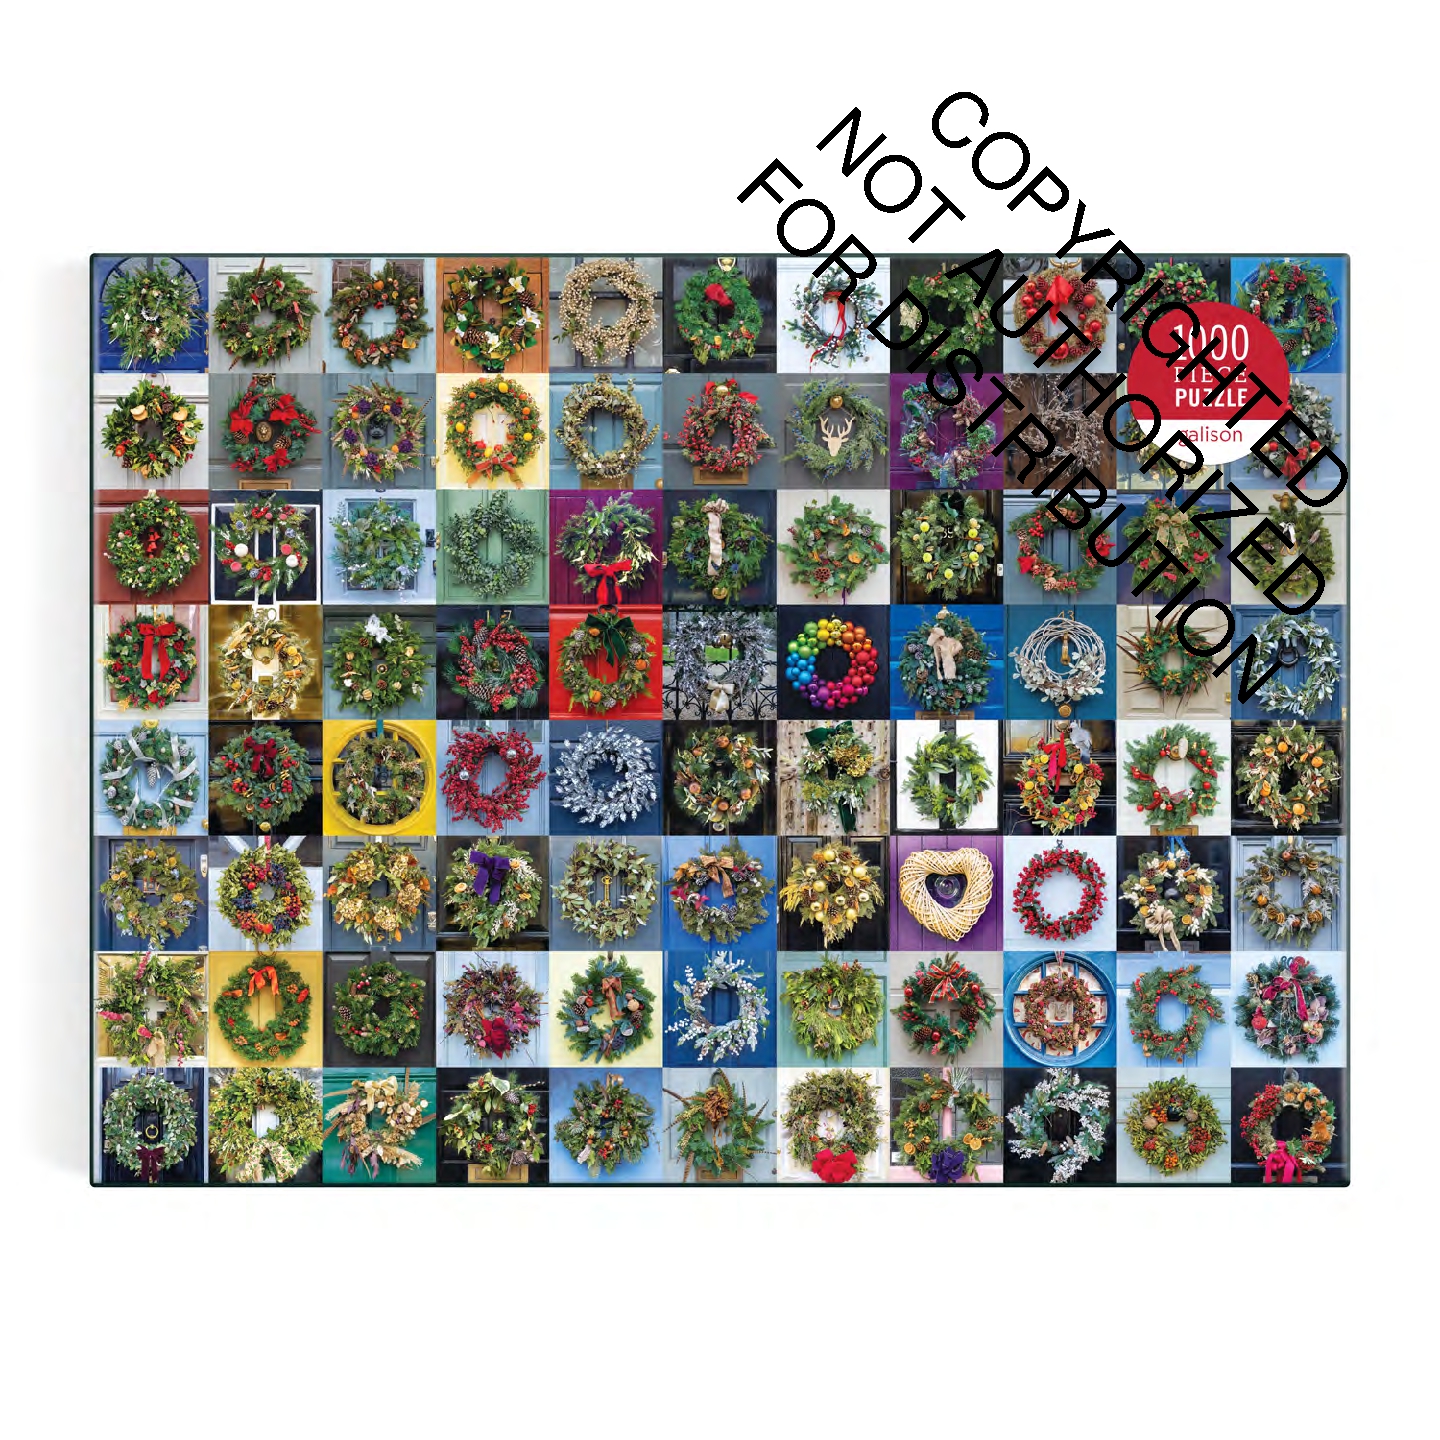 Handmade Wreaths 1000 Piece Puzzle